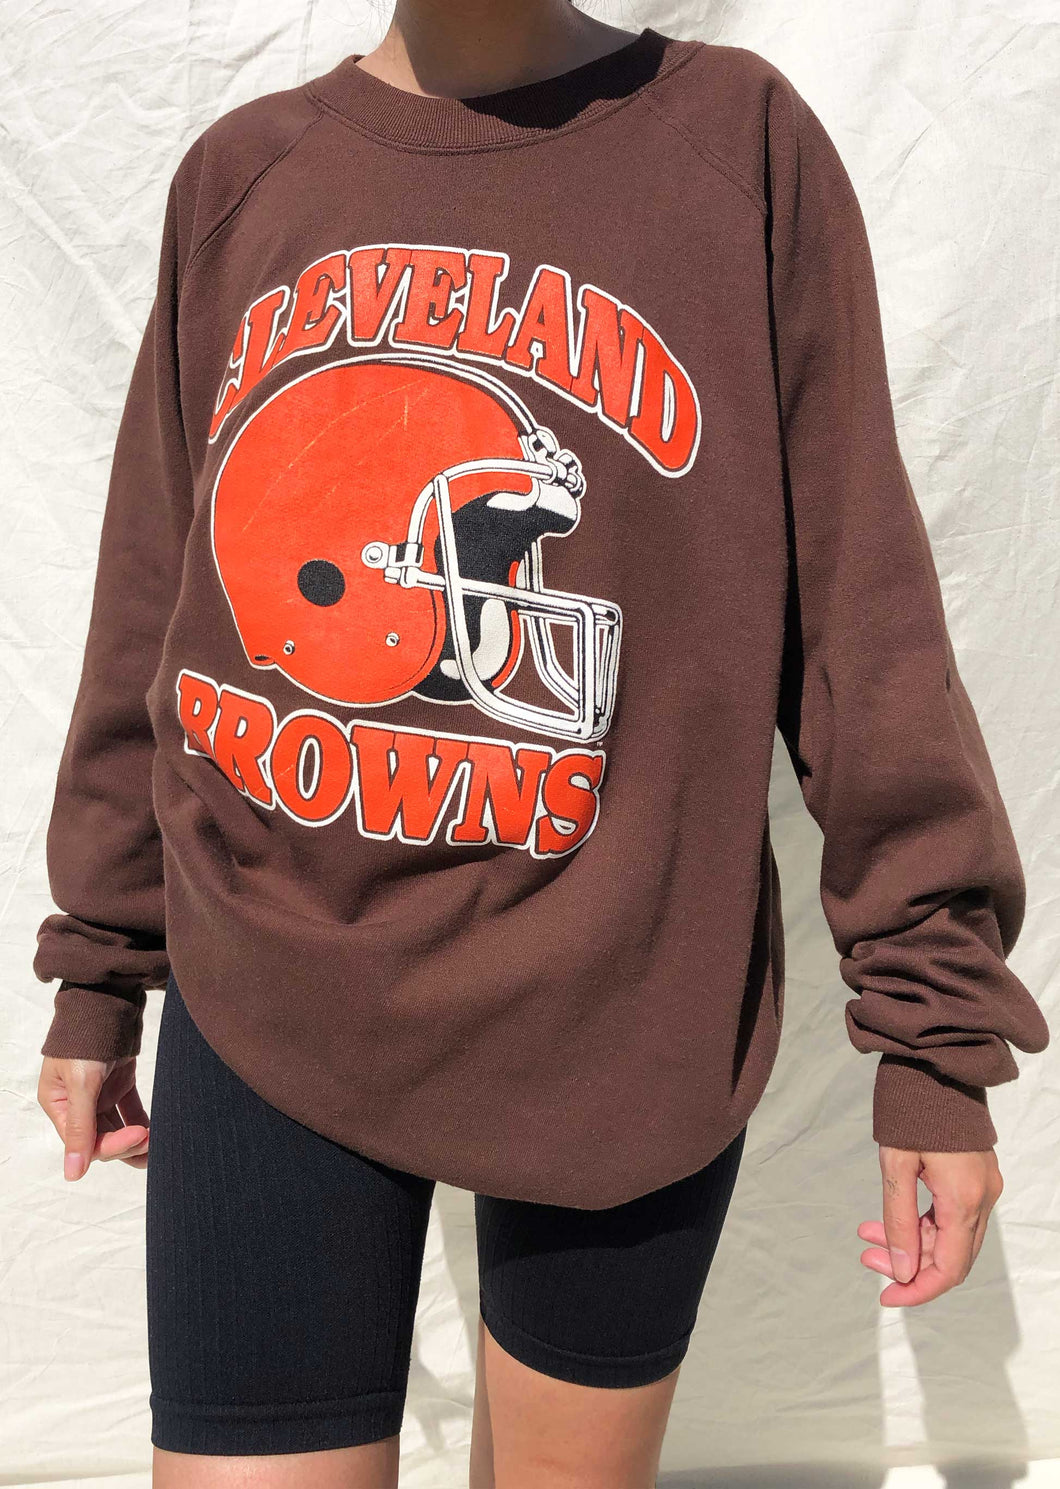 Vintage 90's NFL Cleveland Browns Sweater Brown (L)